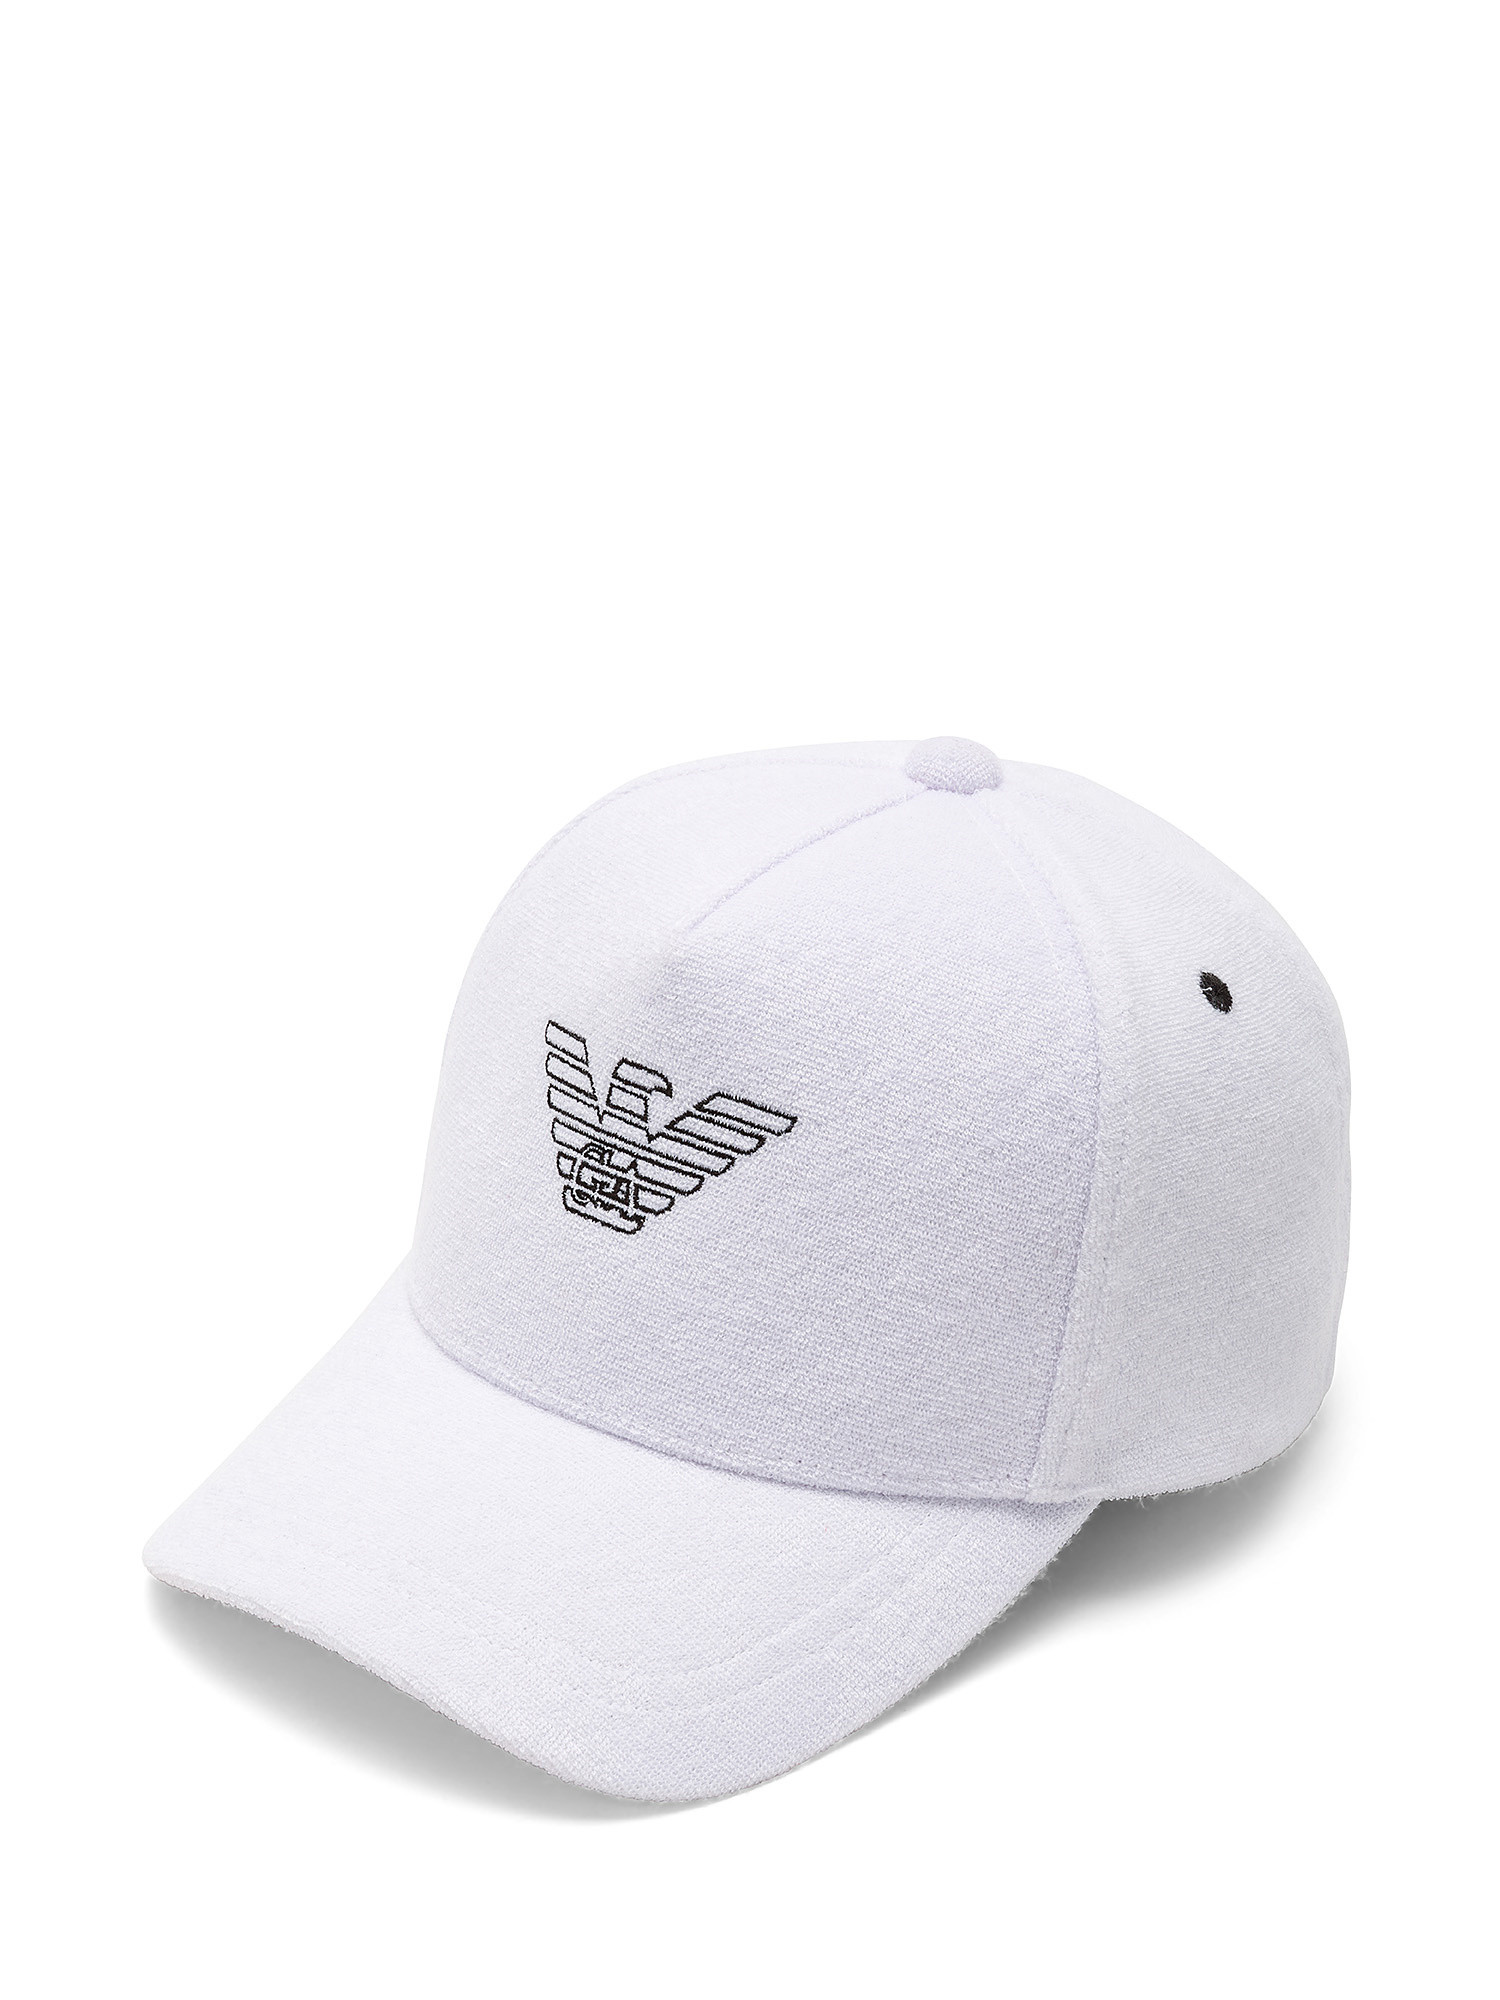 Cappello da baseball con logo aquila, Bianco, large image number 0